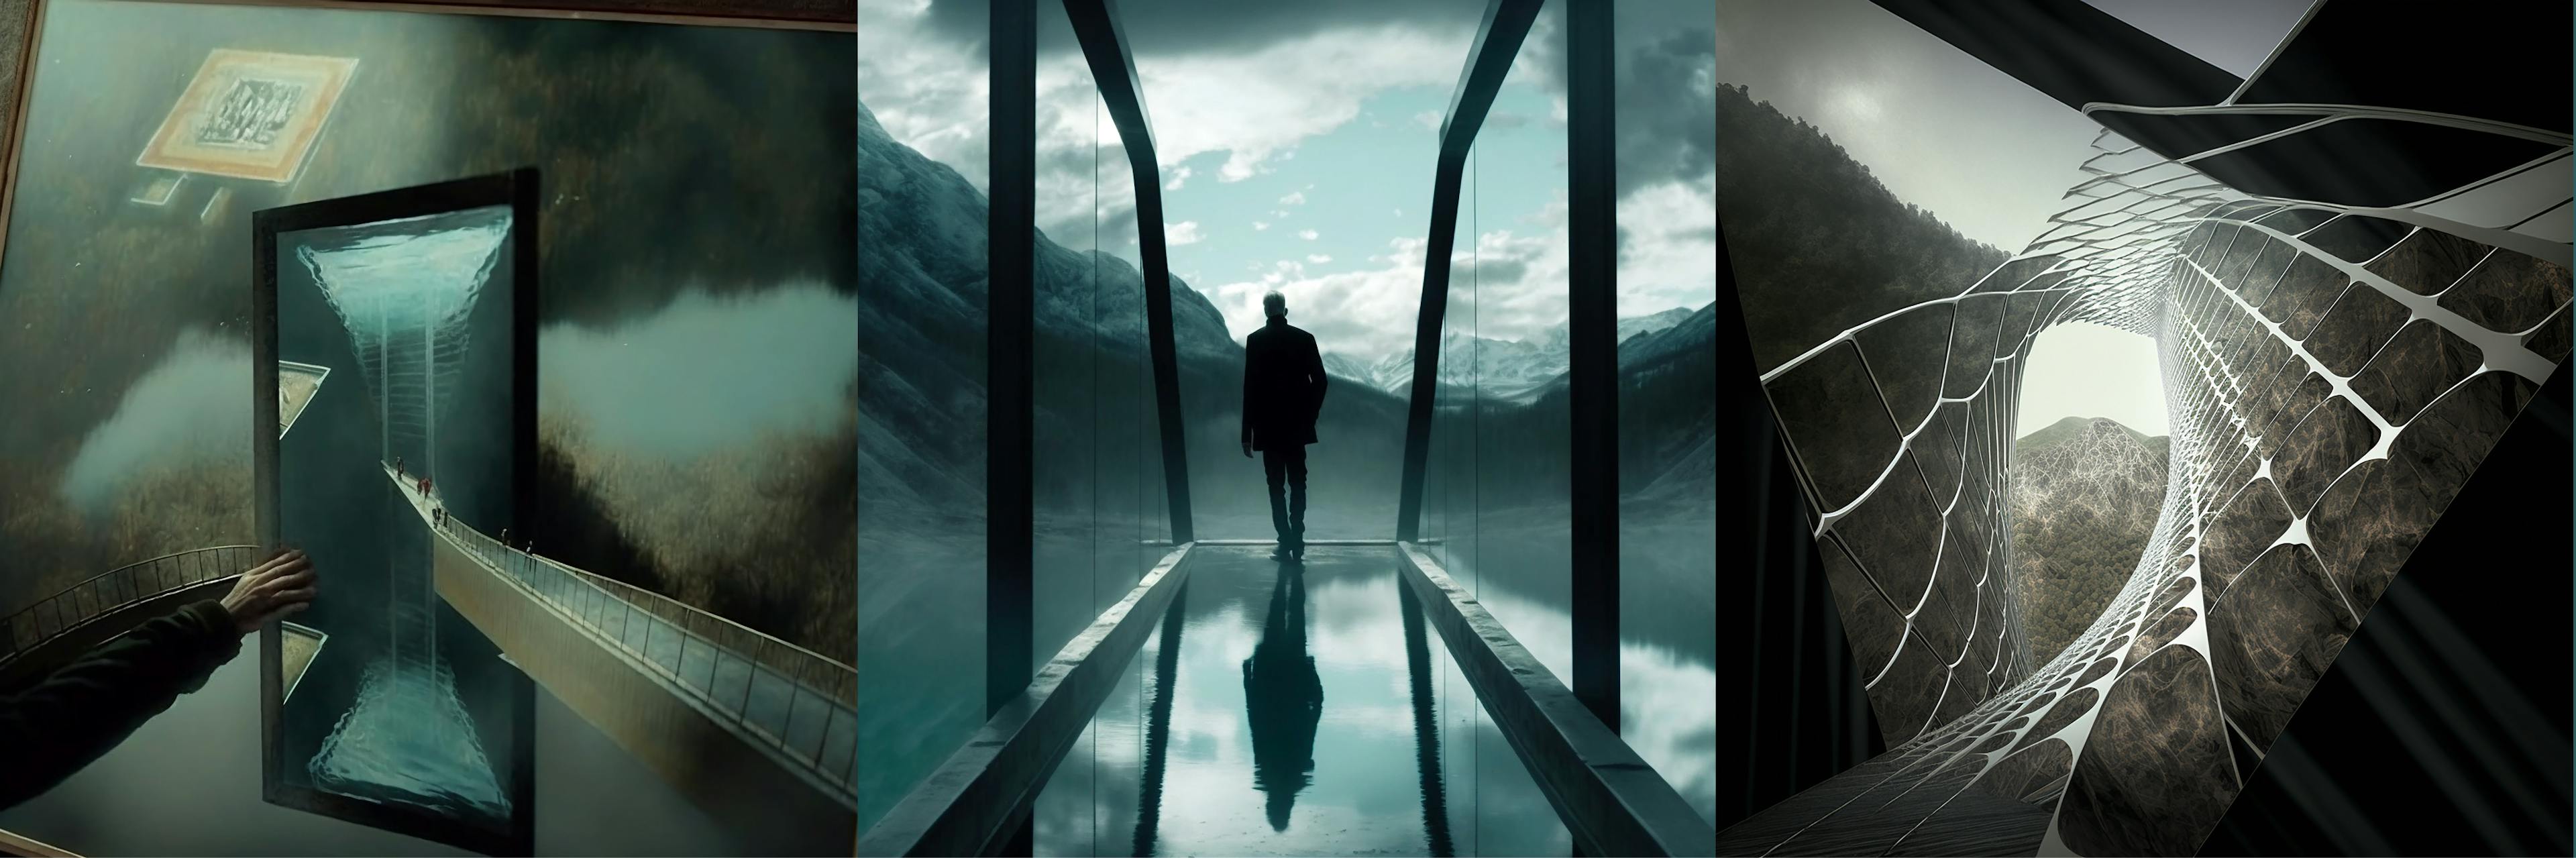 /imagine: A glass bridge filmed by David Lynch